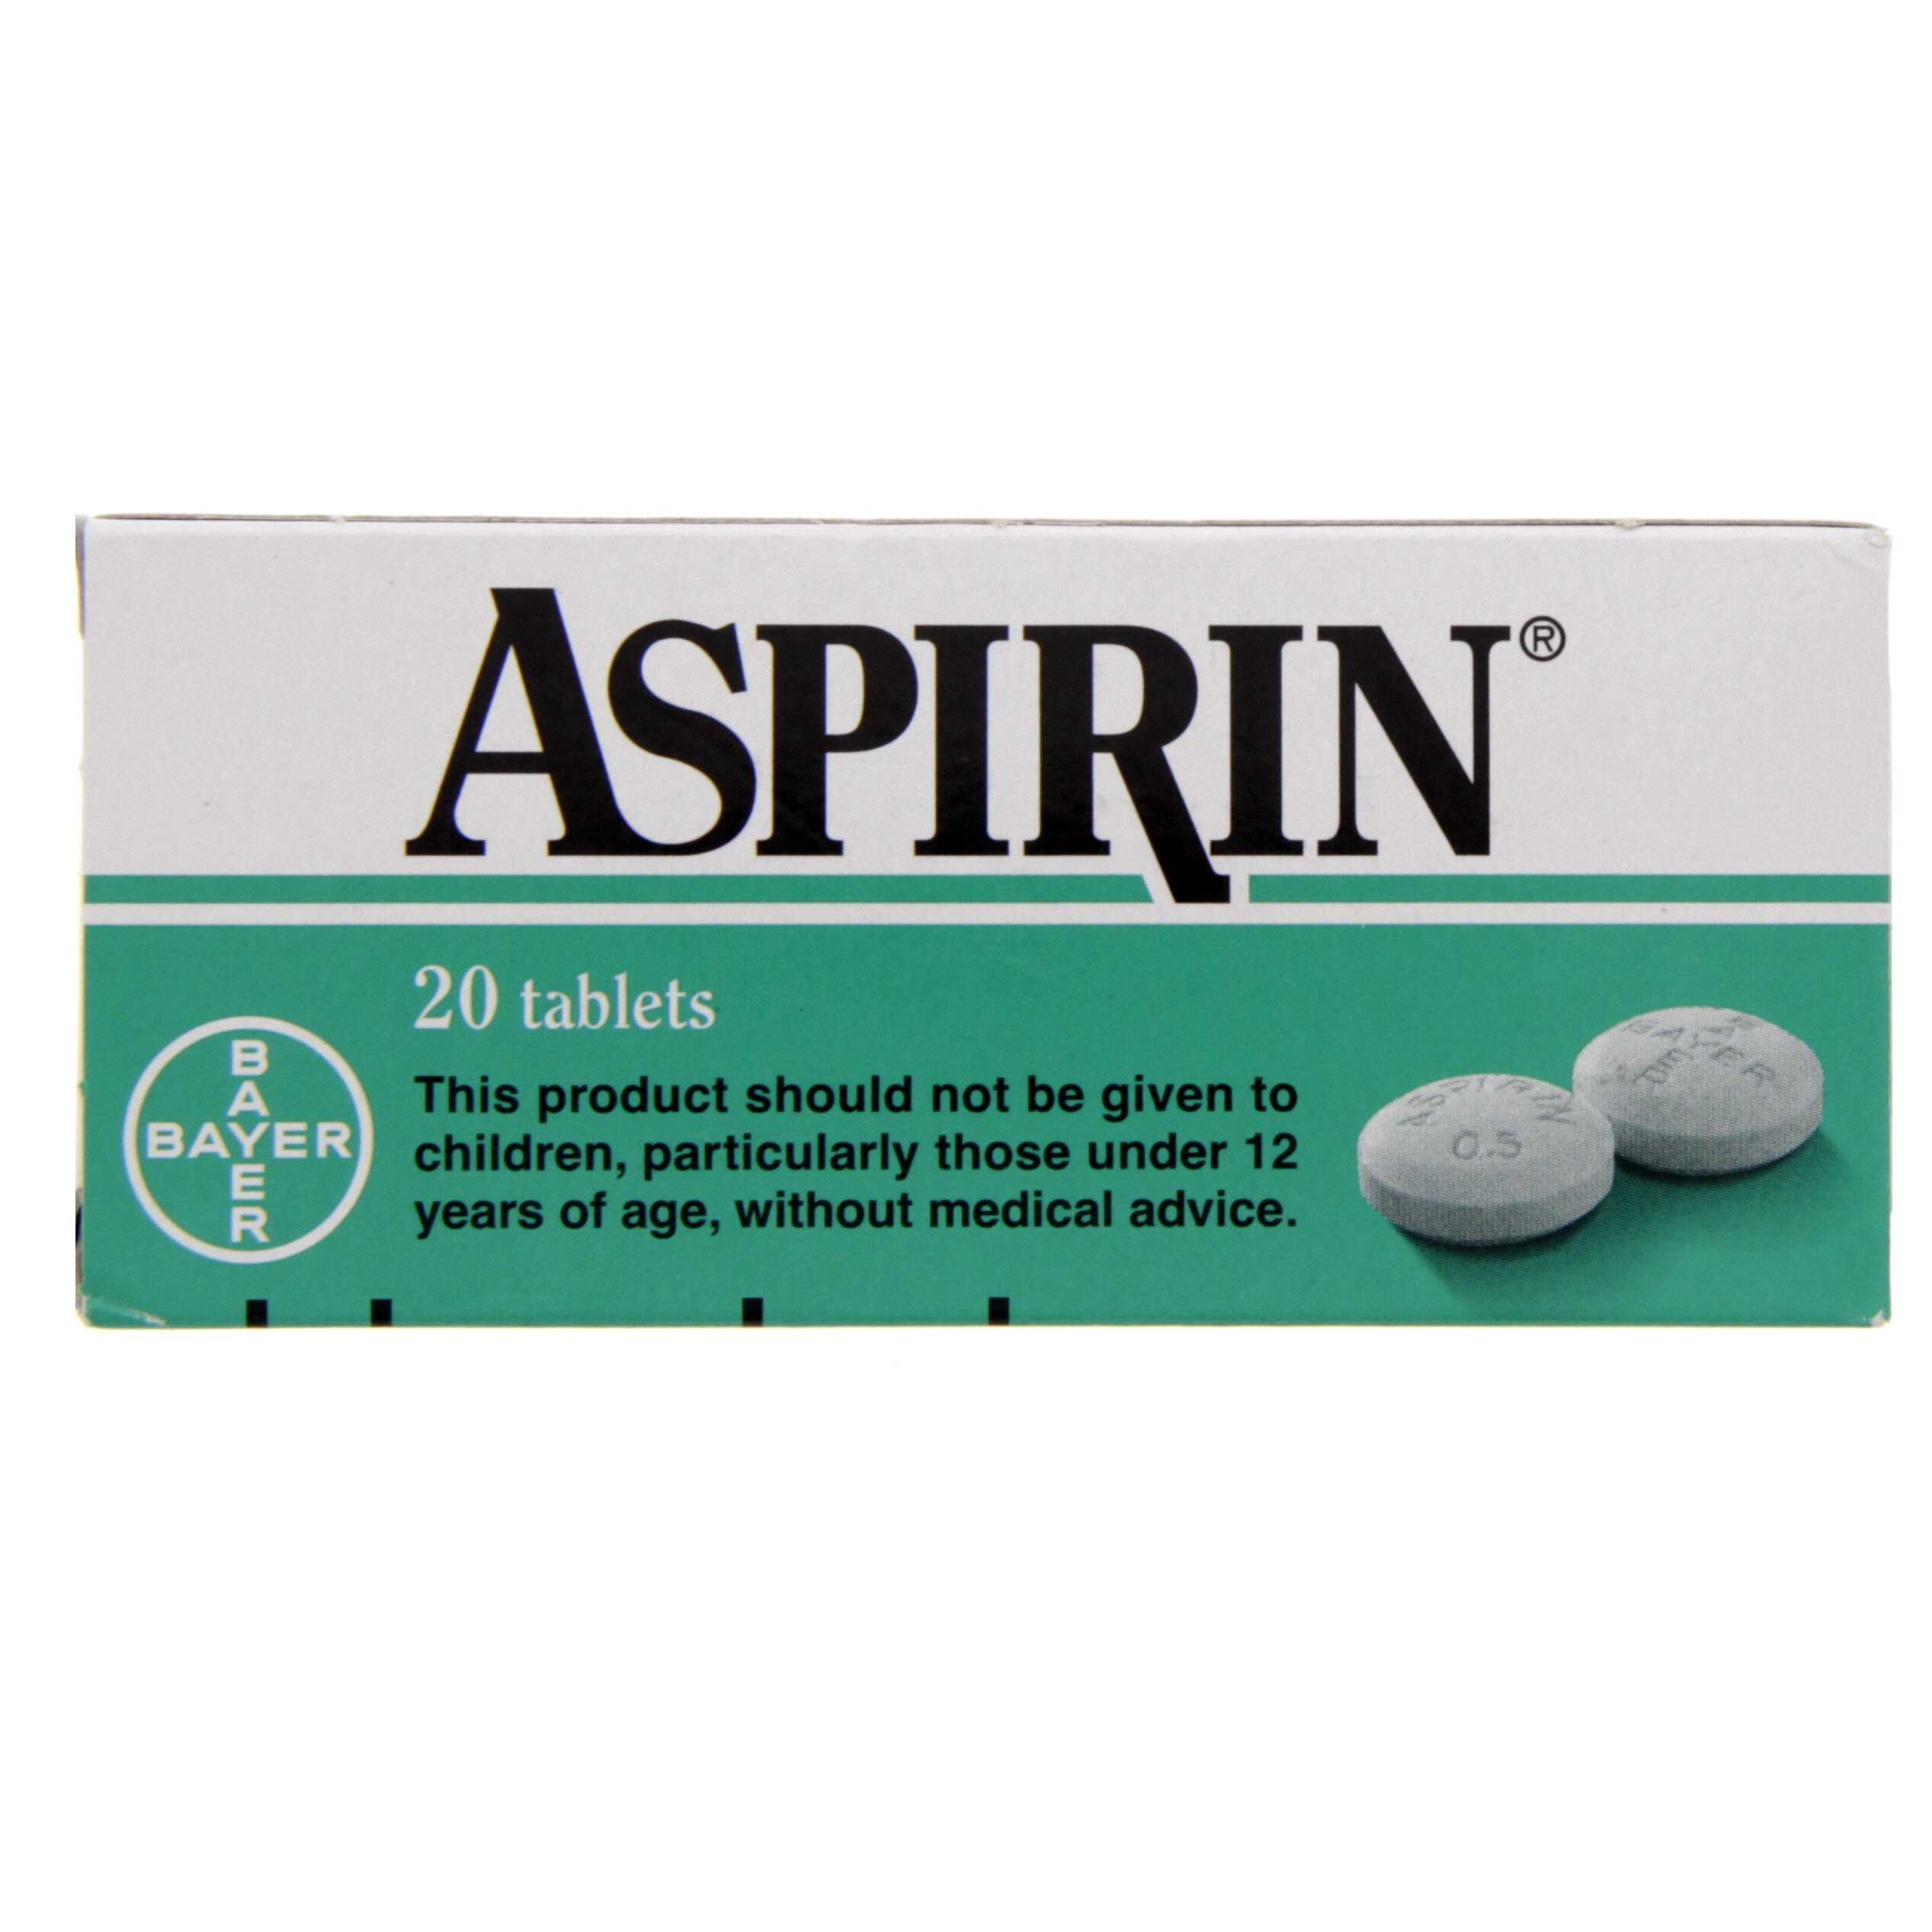 Авиандр отзывы пациентов. Аспирин 125 мг. Таб. Аспирин 0,5. Аспирин картинки. Аспириновые таблетки.